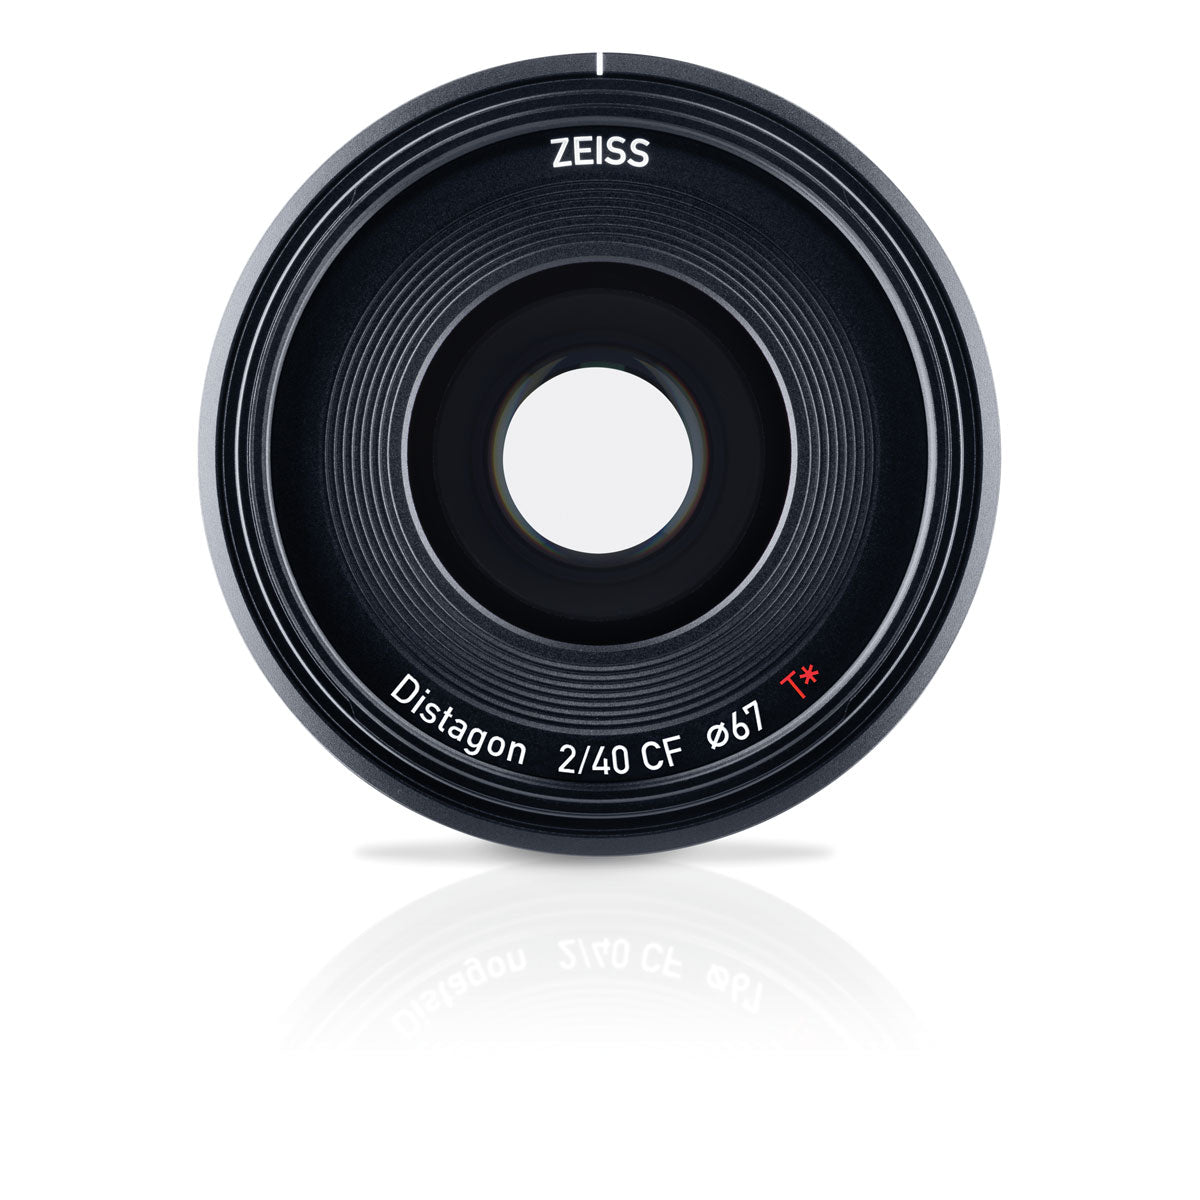 Zeiss Batis 40mm f2.0 CF for Sony E-Mount